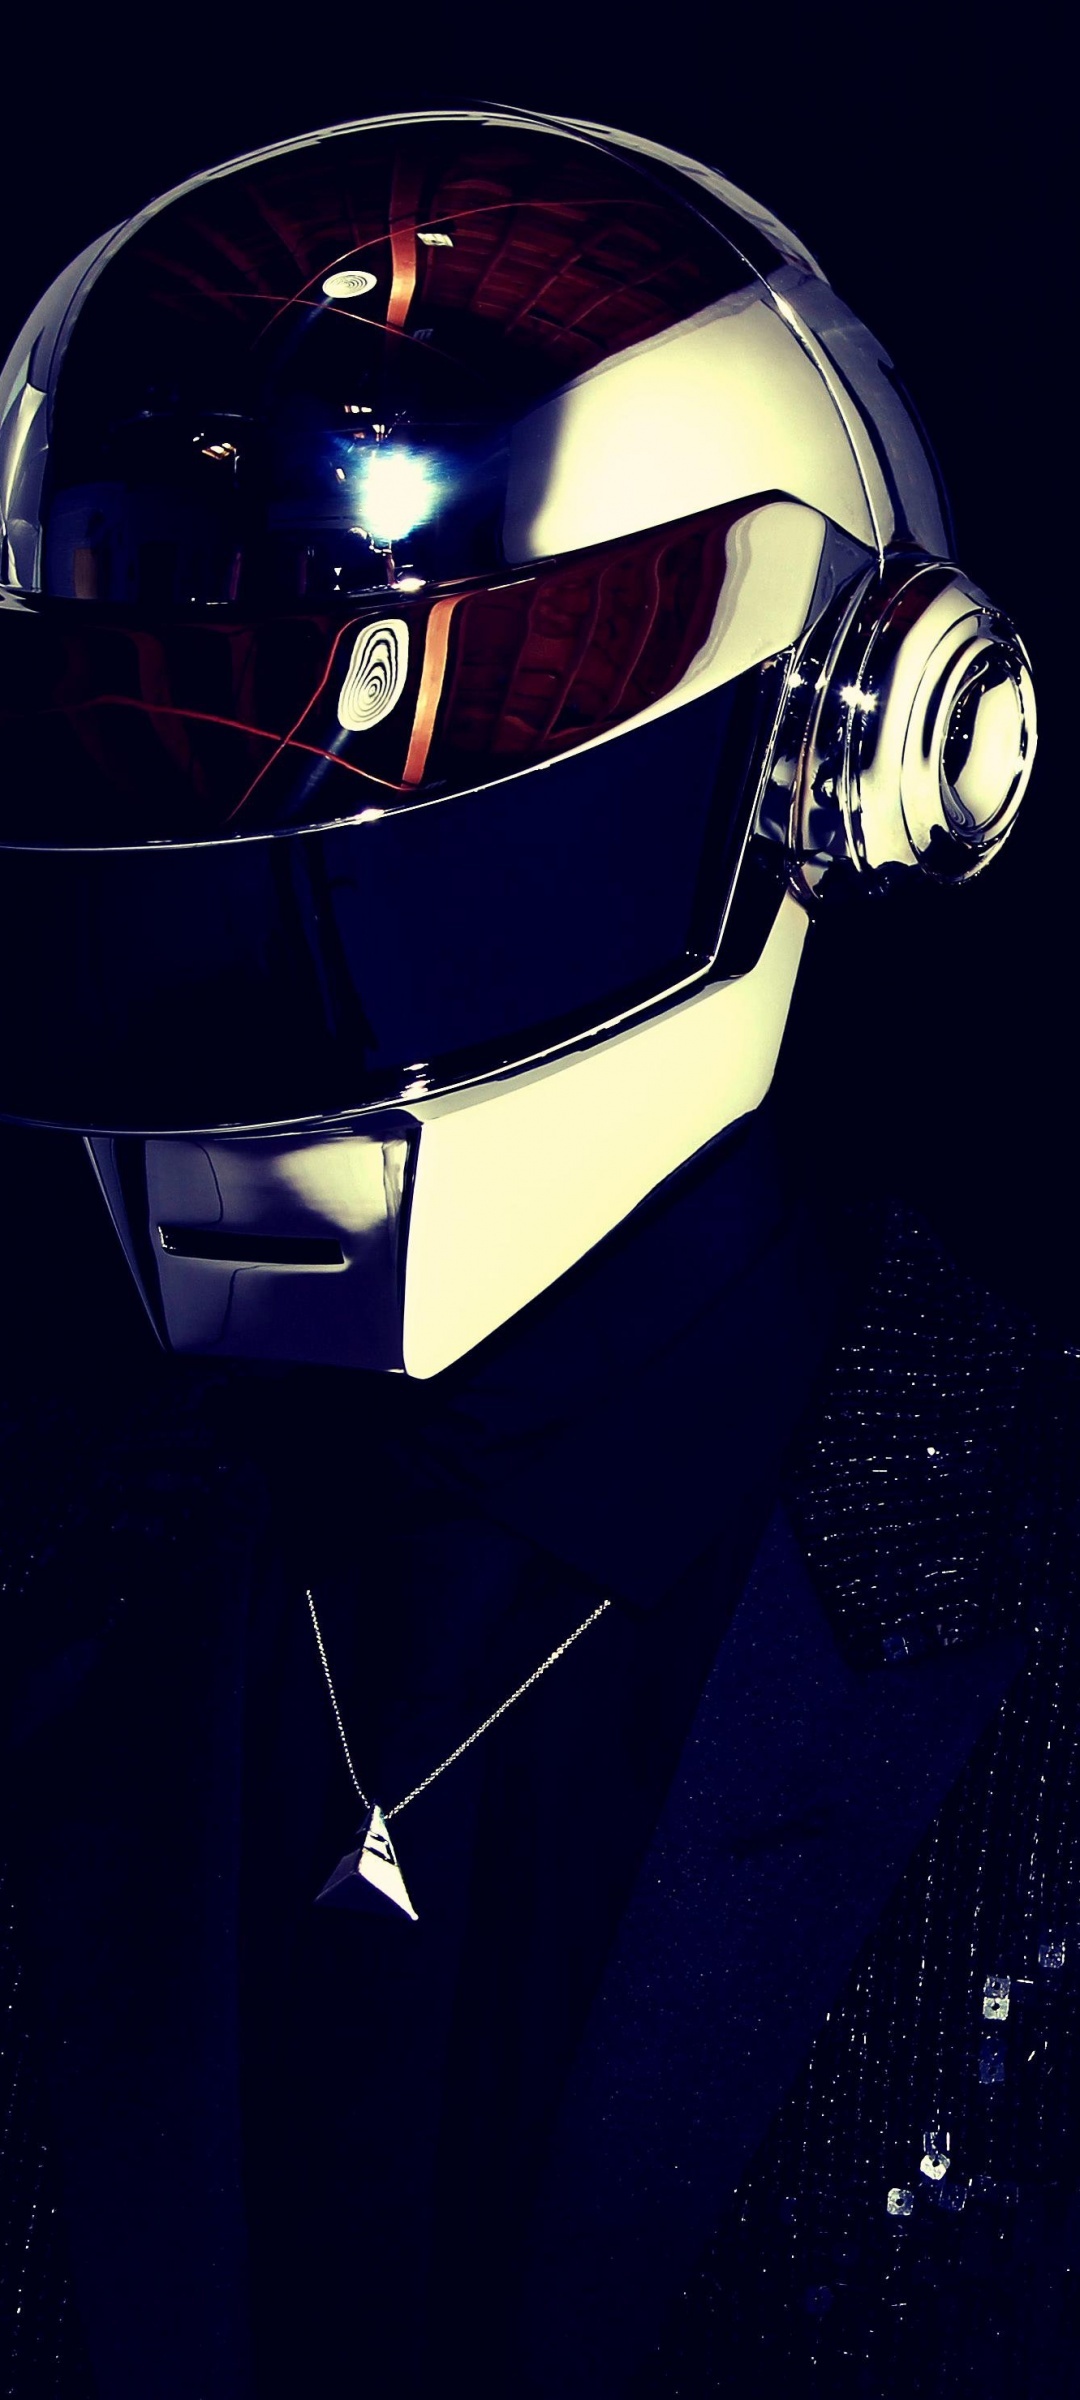 Daft Punk, Electronic music duo, Black background, Dark ambiance, 1080x2400 HD Phone